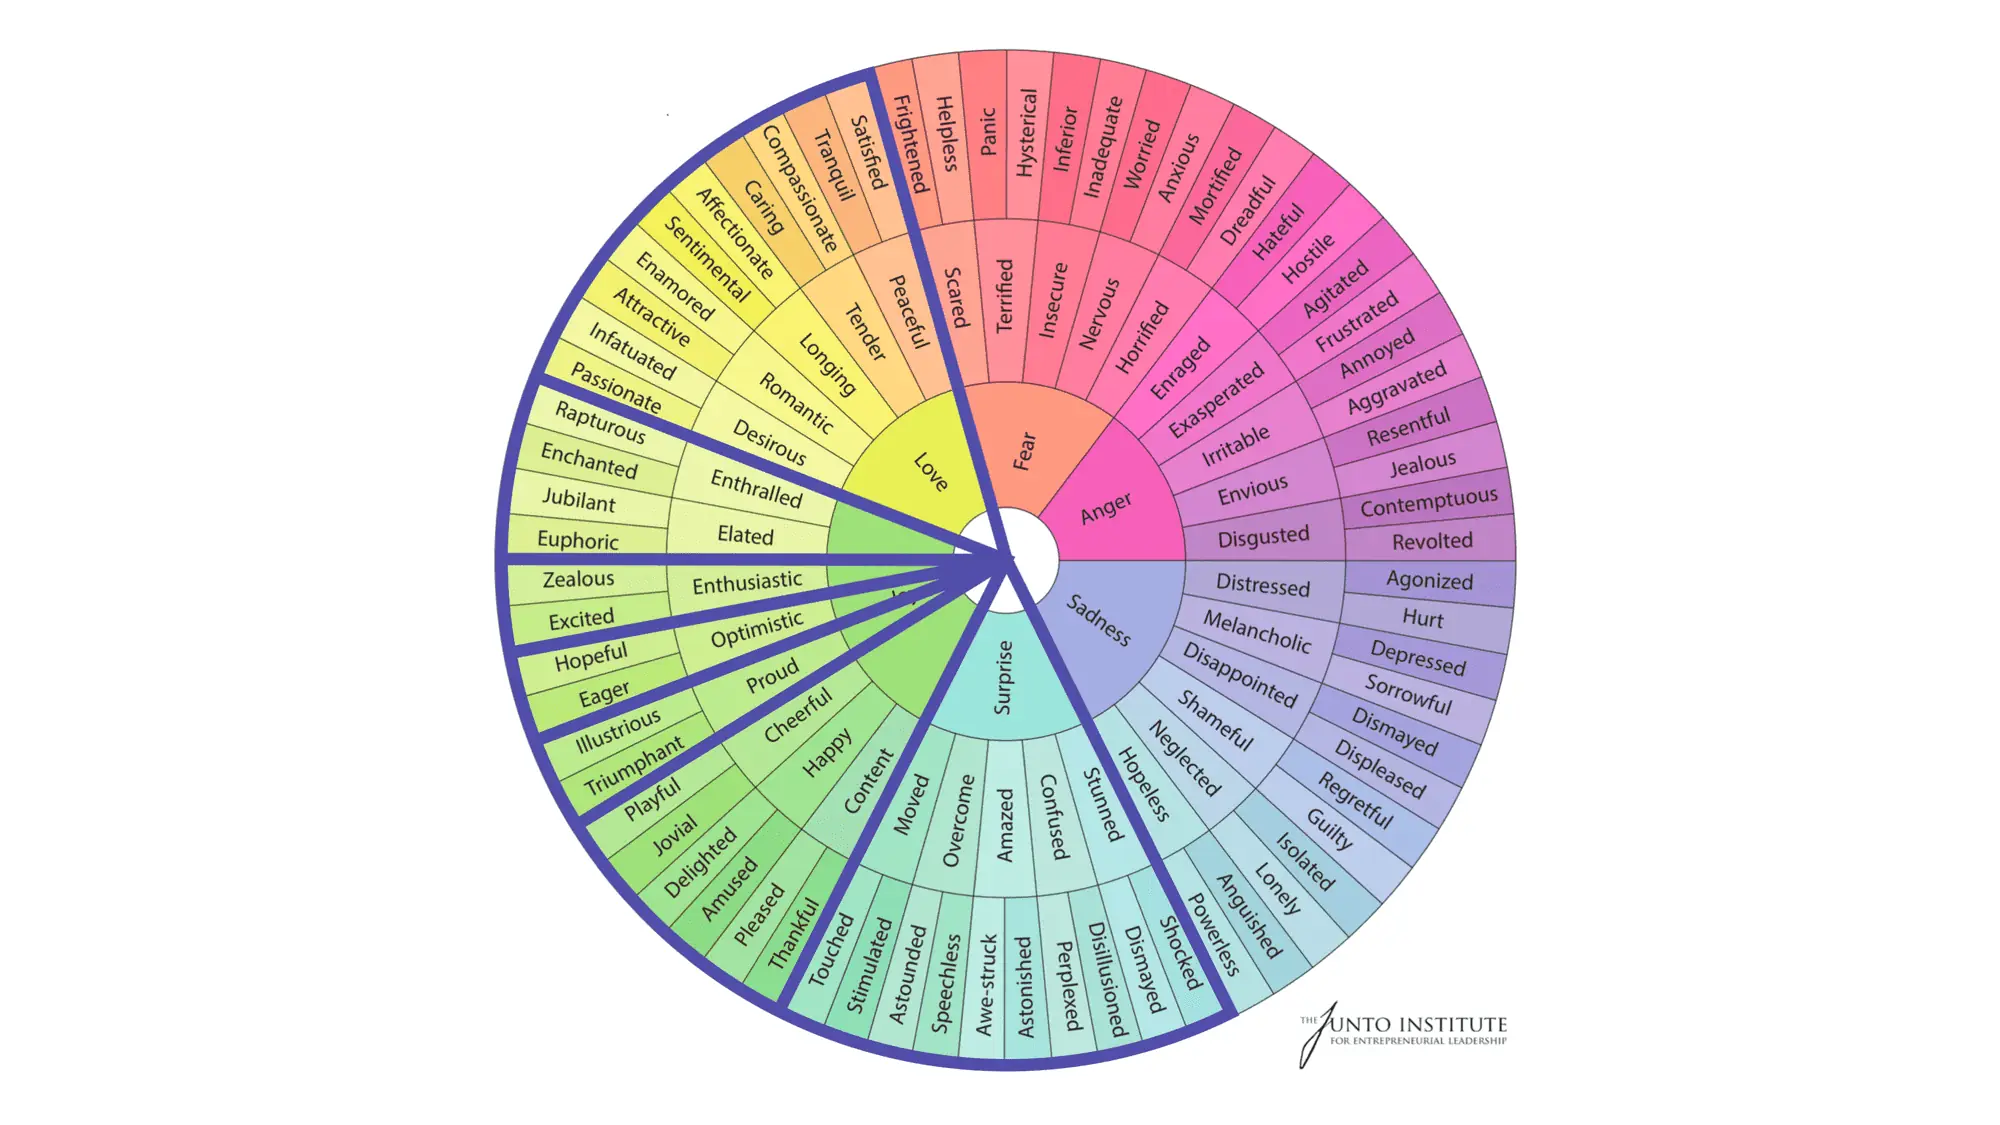 The Emotional Wheel